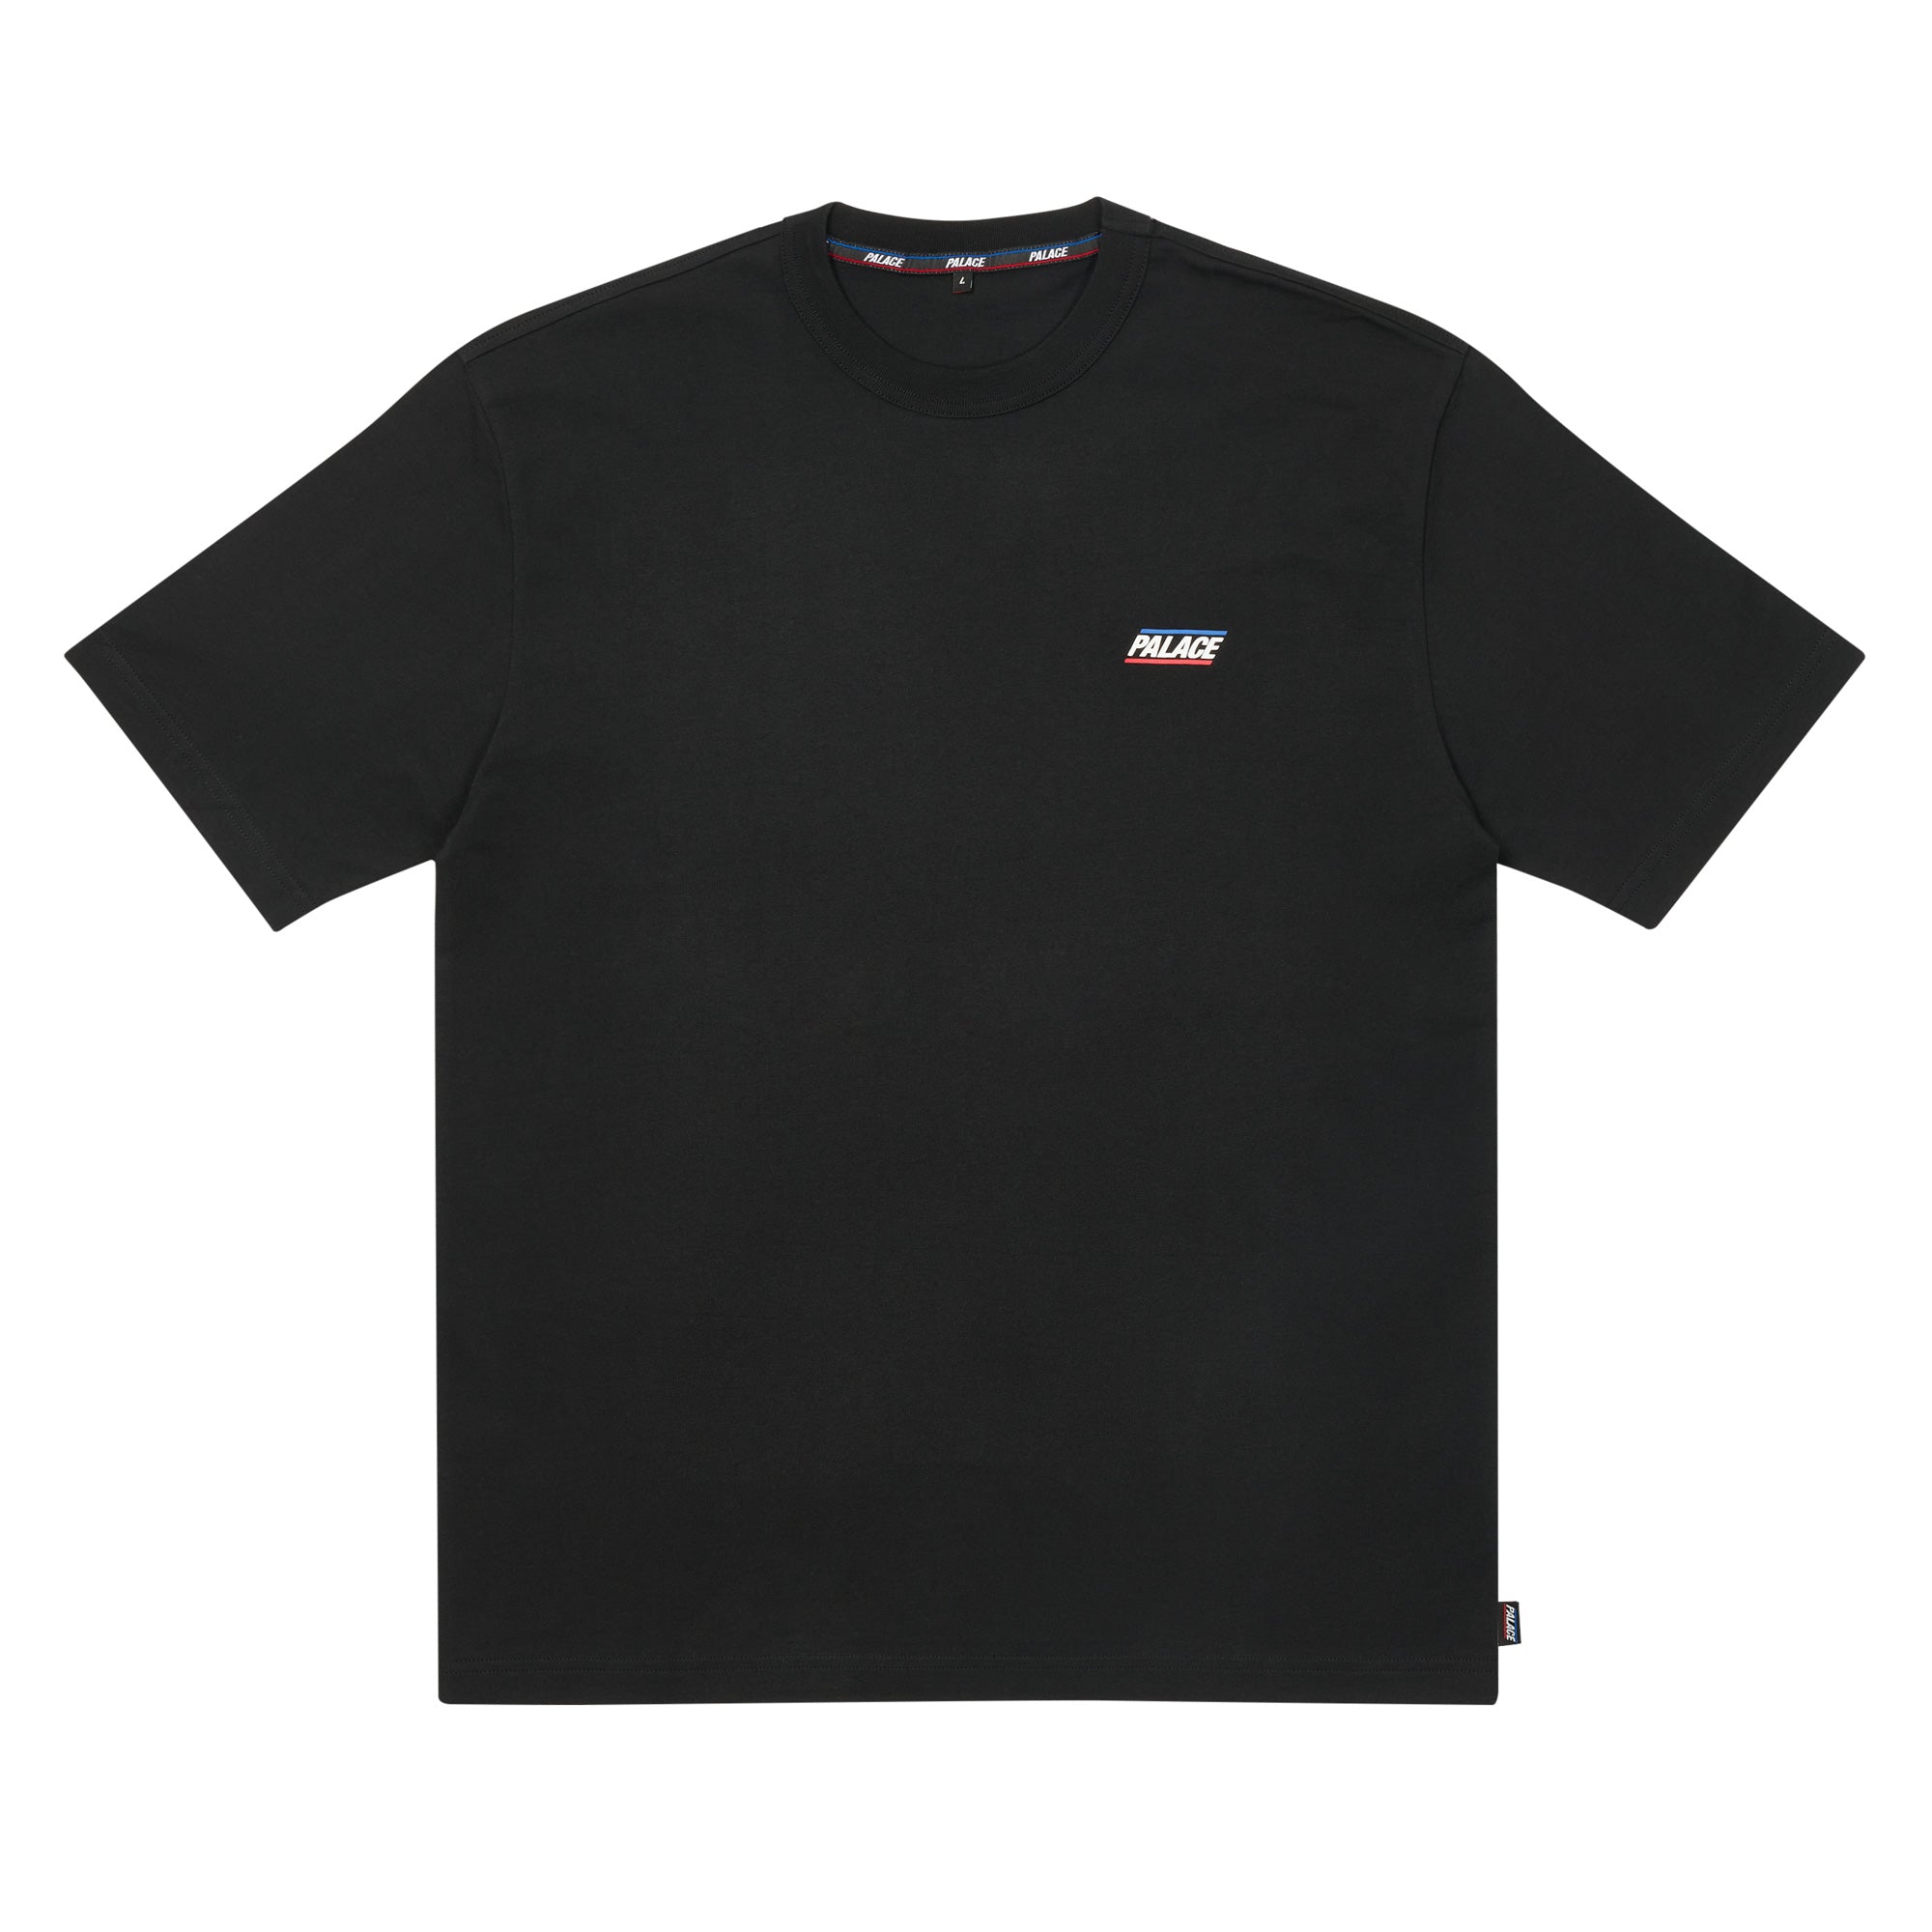 Palace - Basically A T-Shirt - (Black) view 1